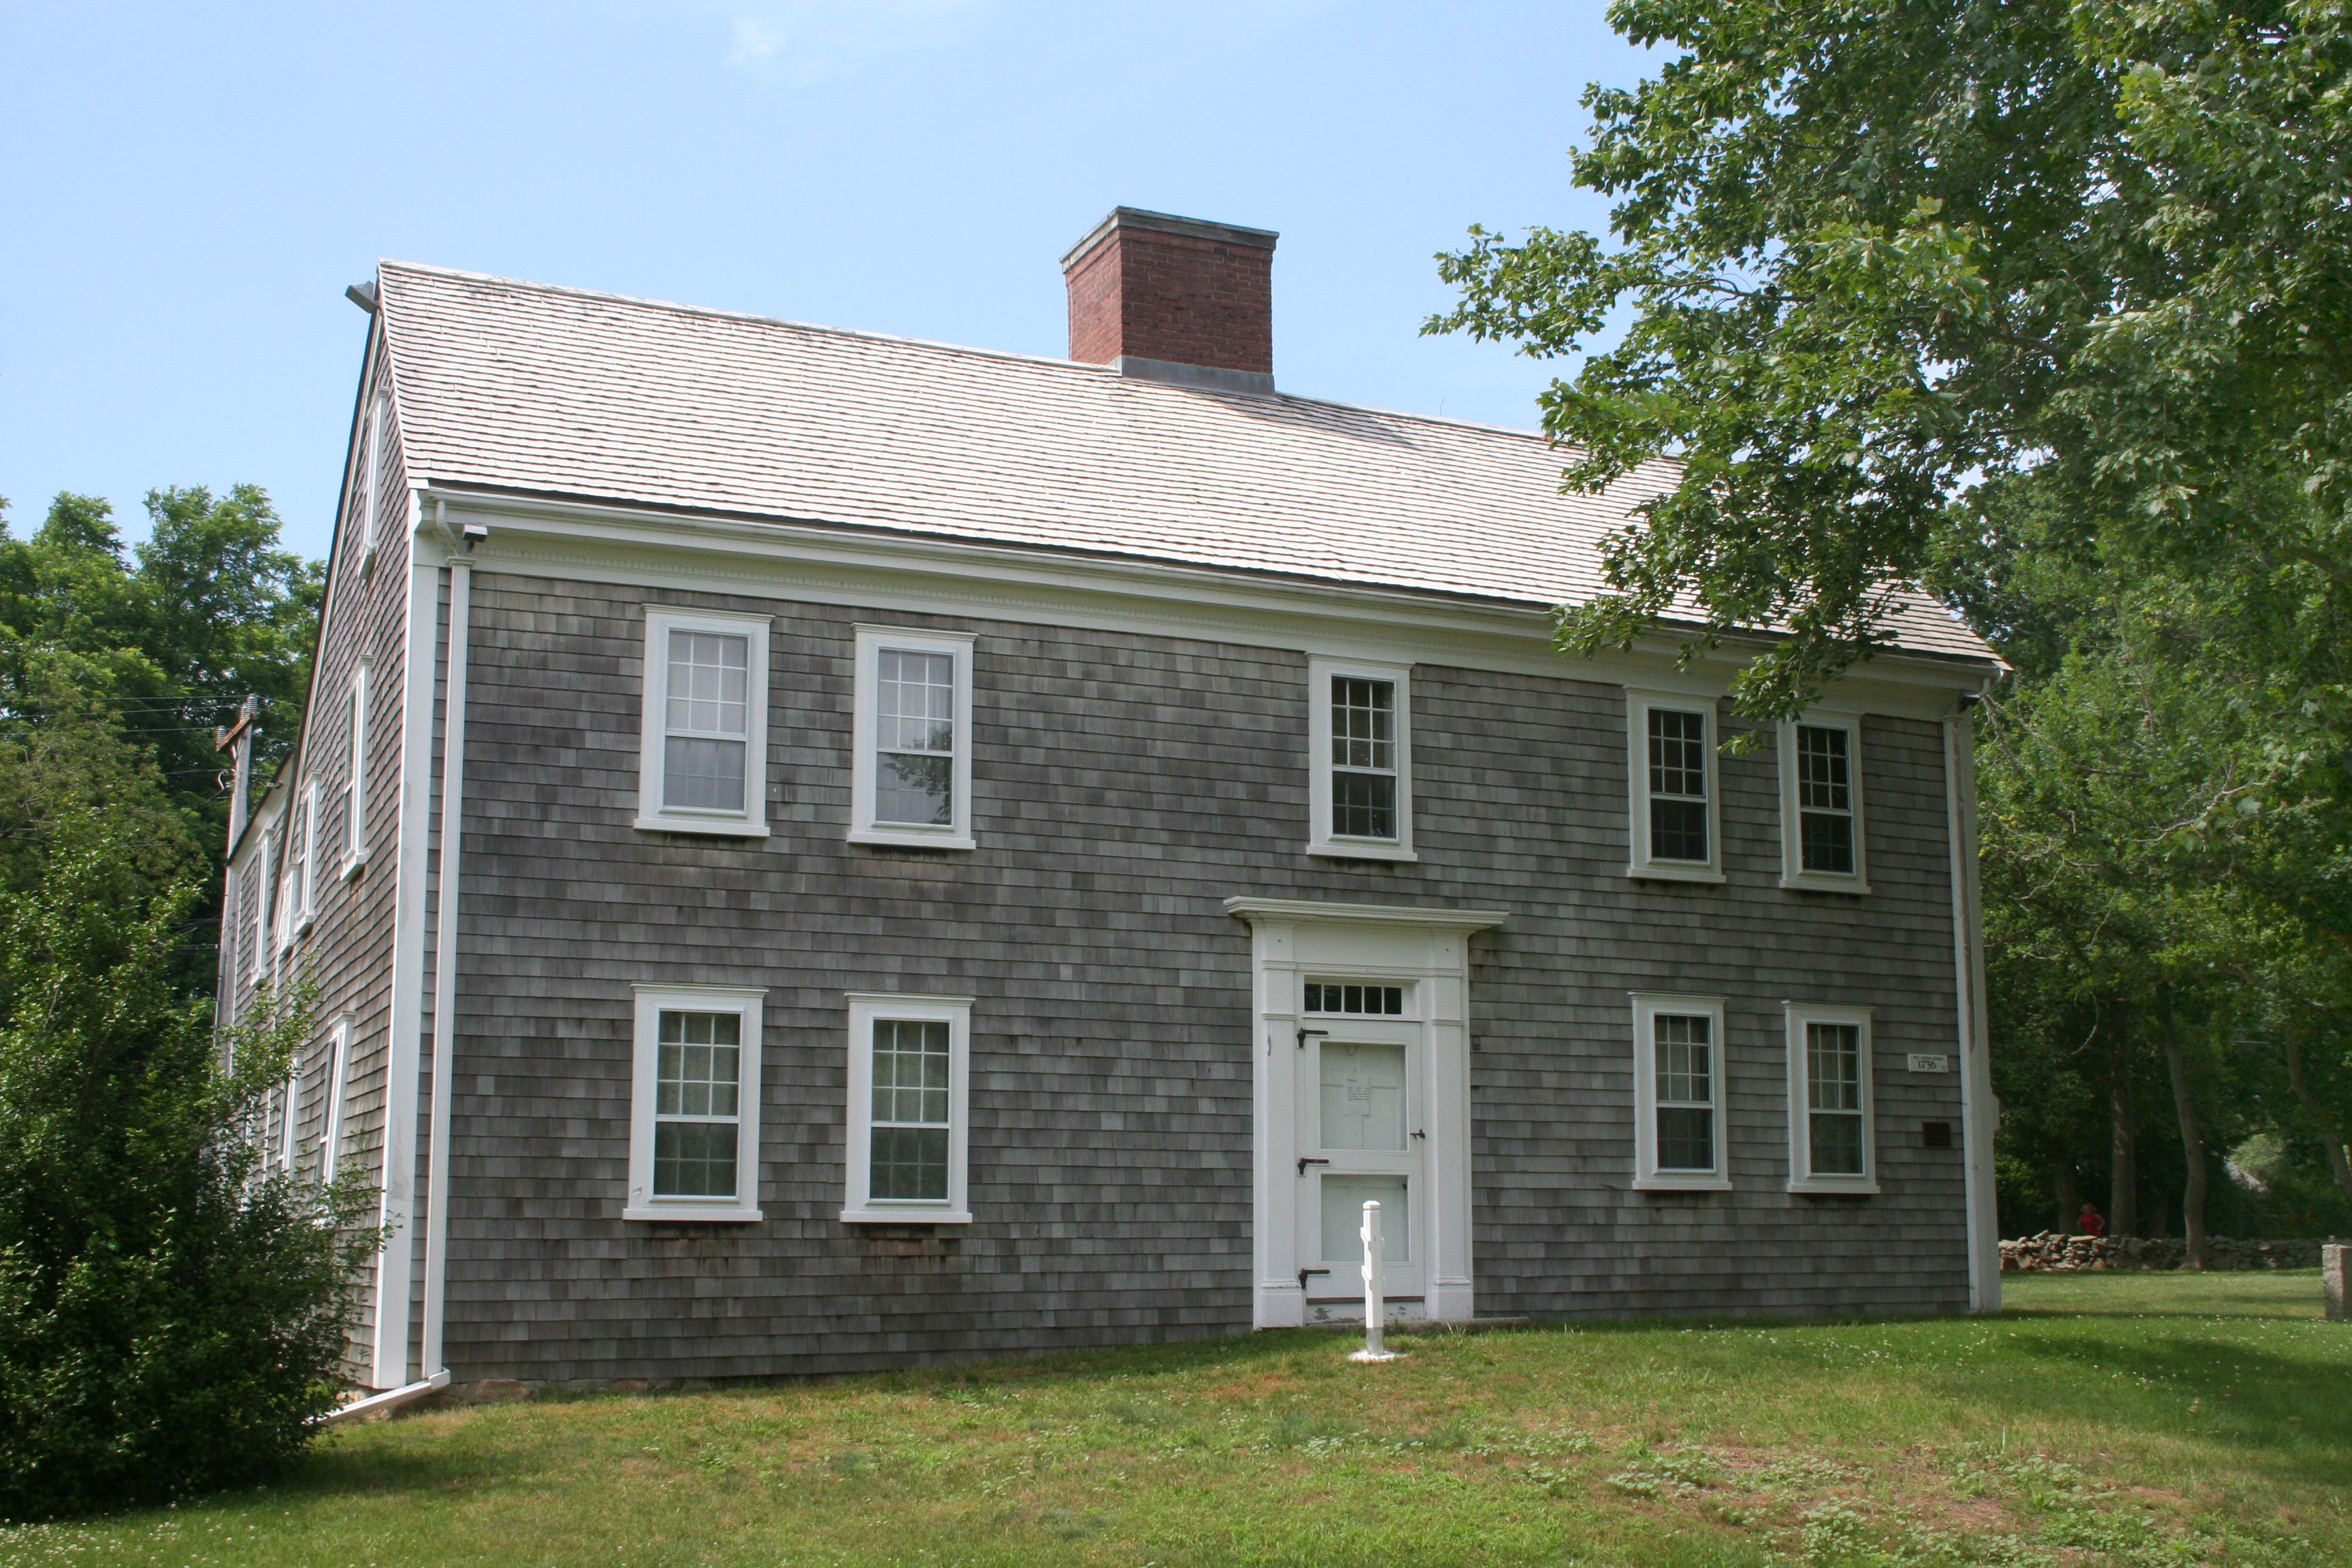 File:Josiah Dennis House.jpg - Wikimedia Commons